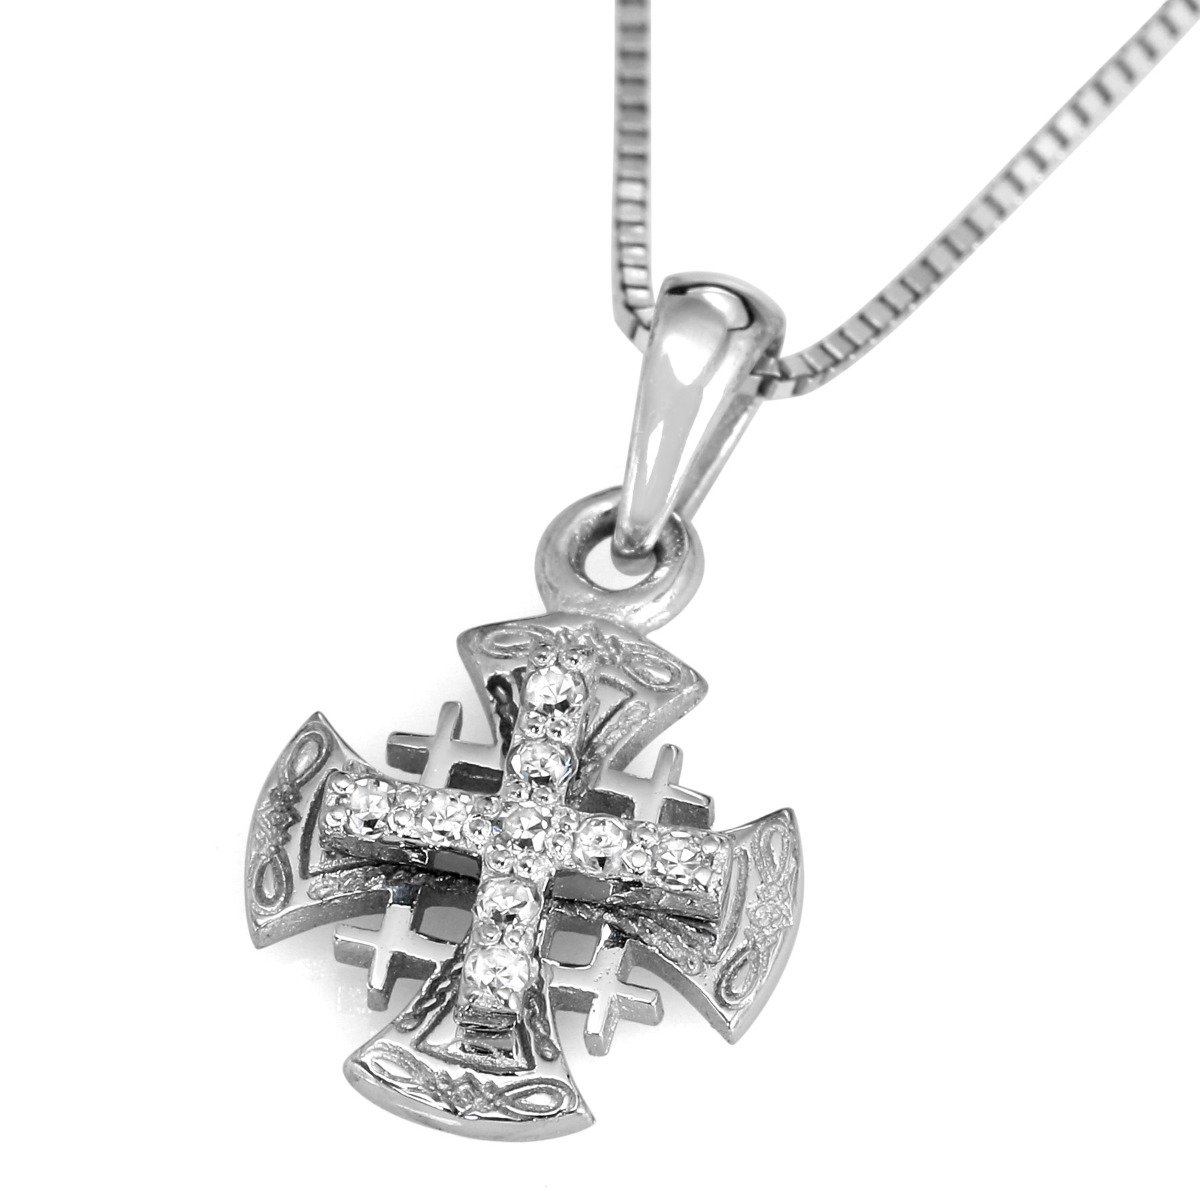 Anbinder Jewelry 14K White Gold Splayed Jerusalem Cross with Celtic Knots Border and 9 Diamonds - 1